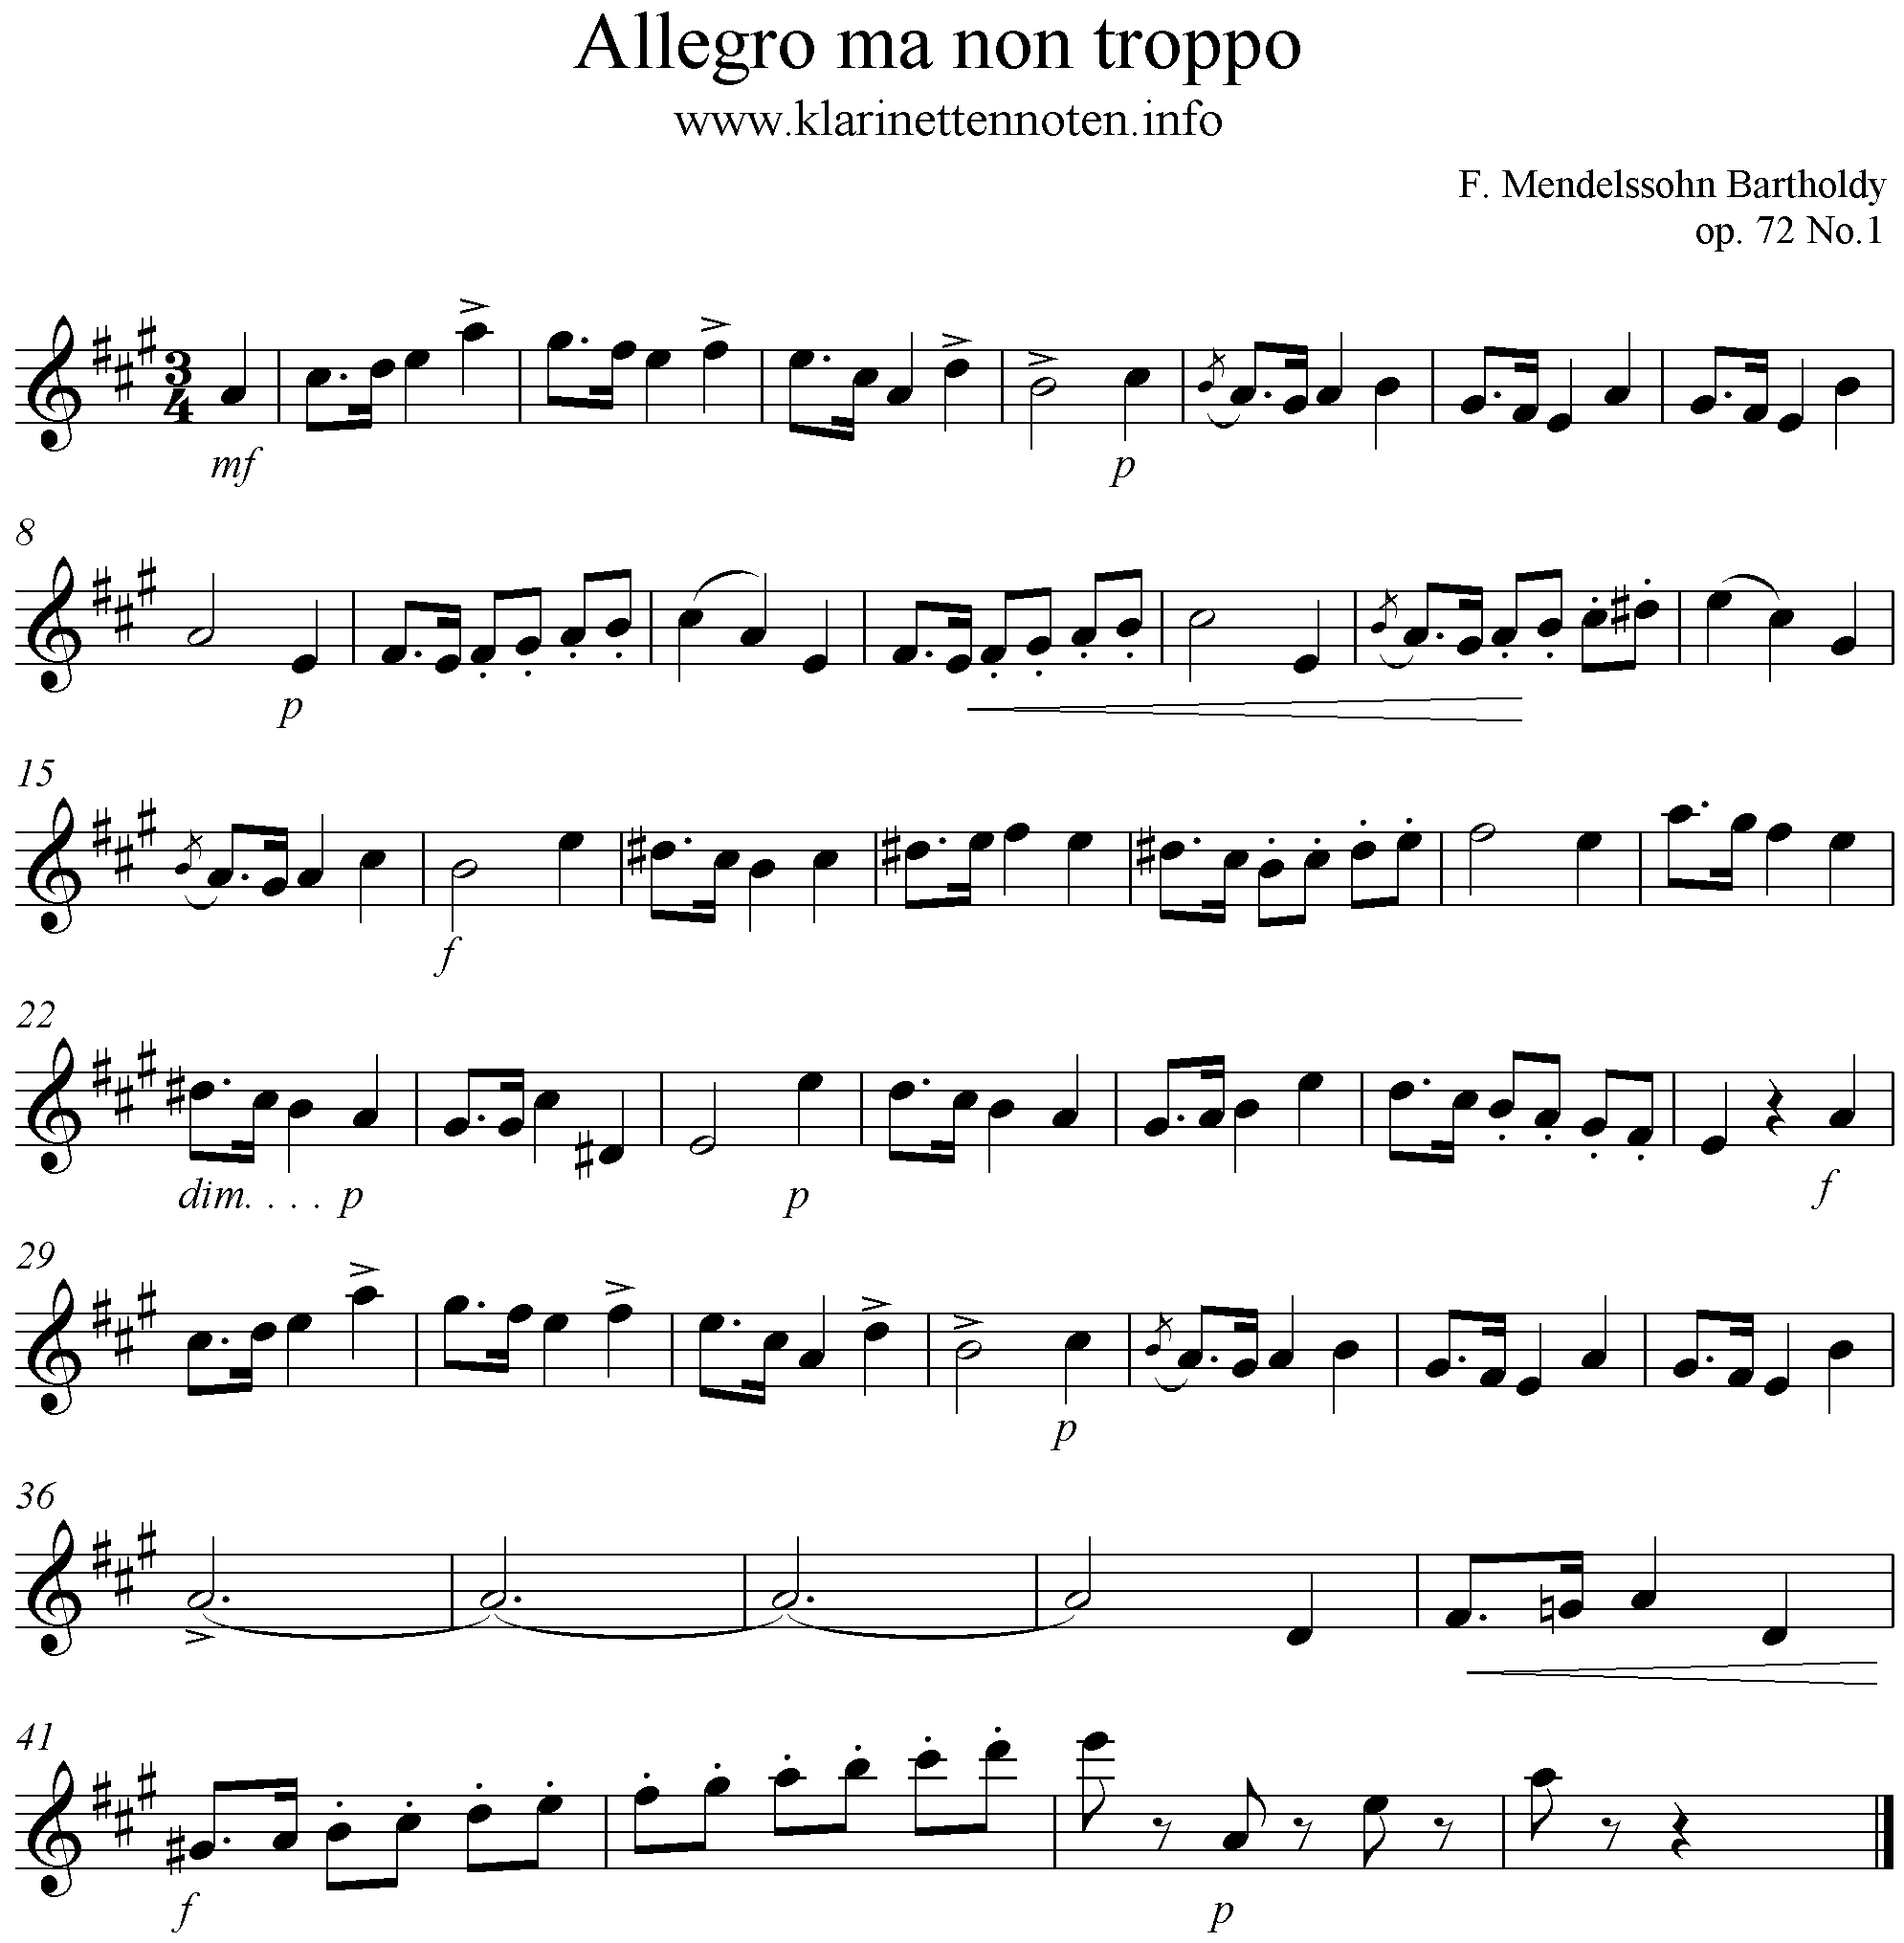 Allegro ma non tropp, op 72/1, Christmas pieces, Mendelssohn Bartholdy